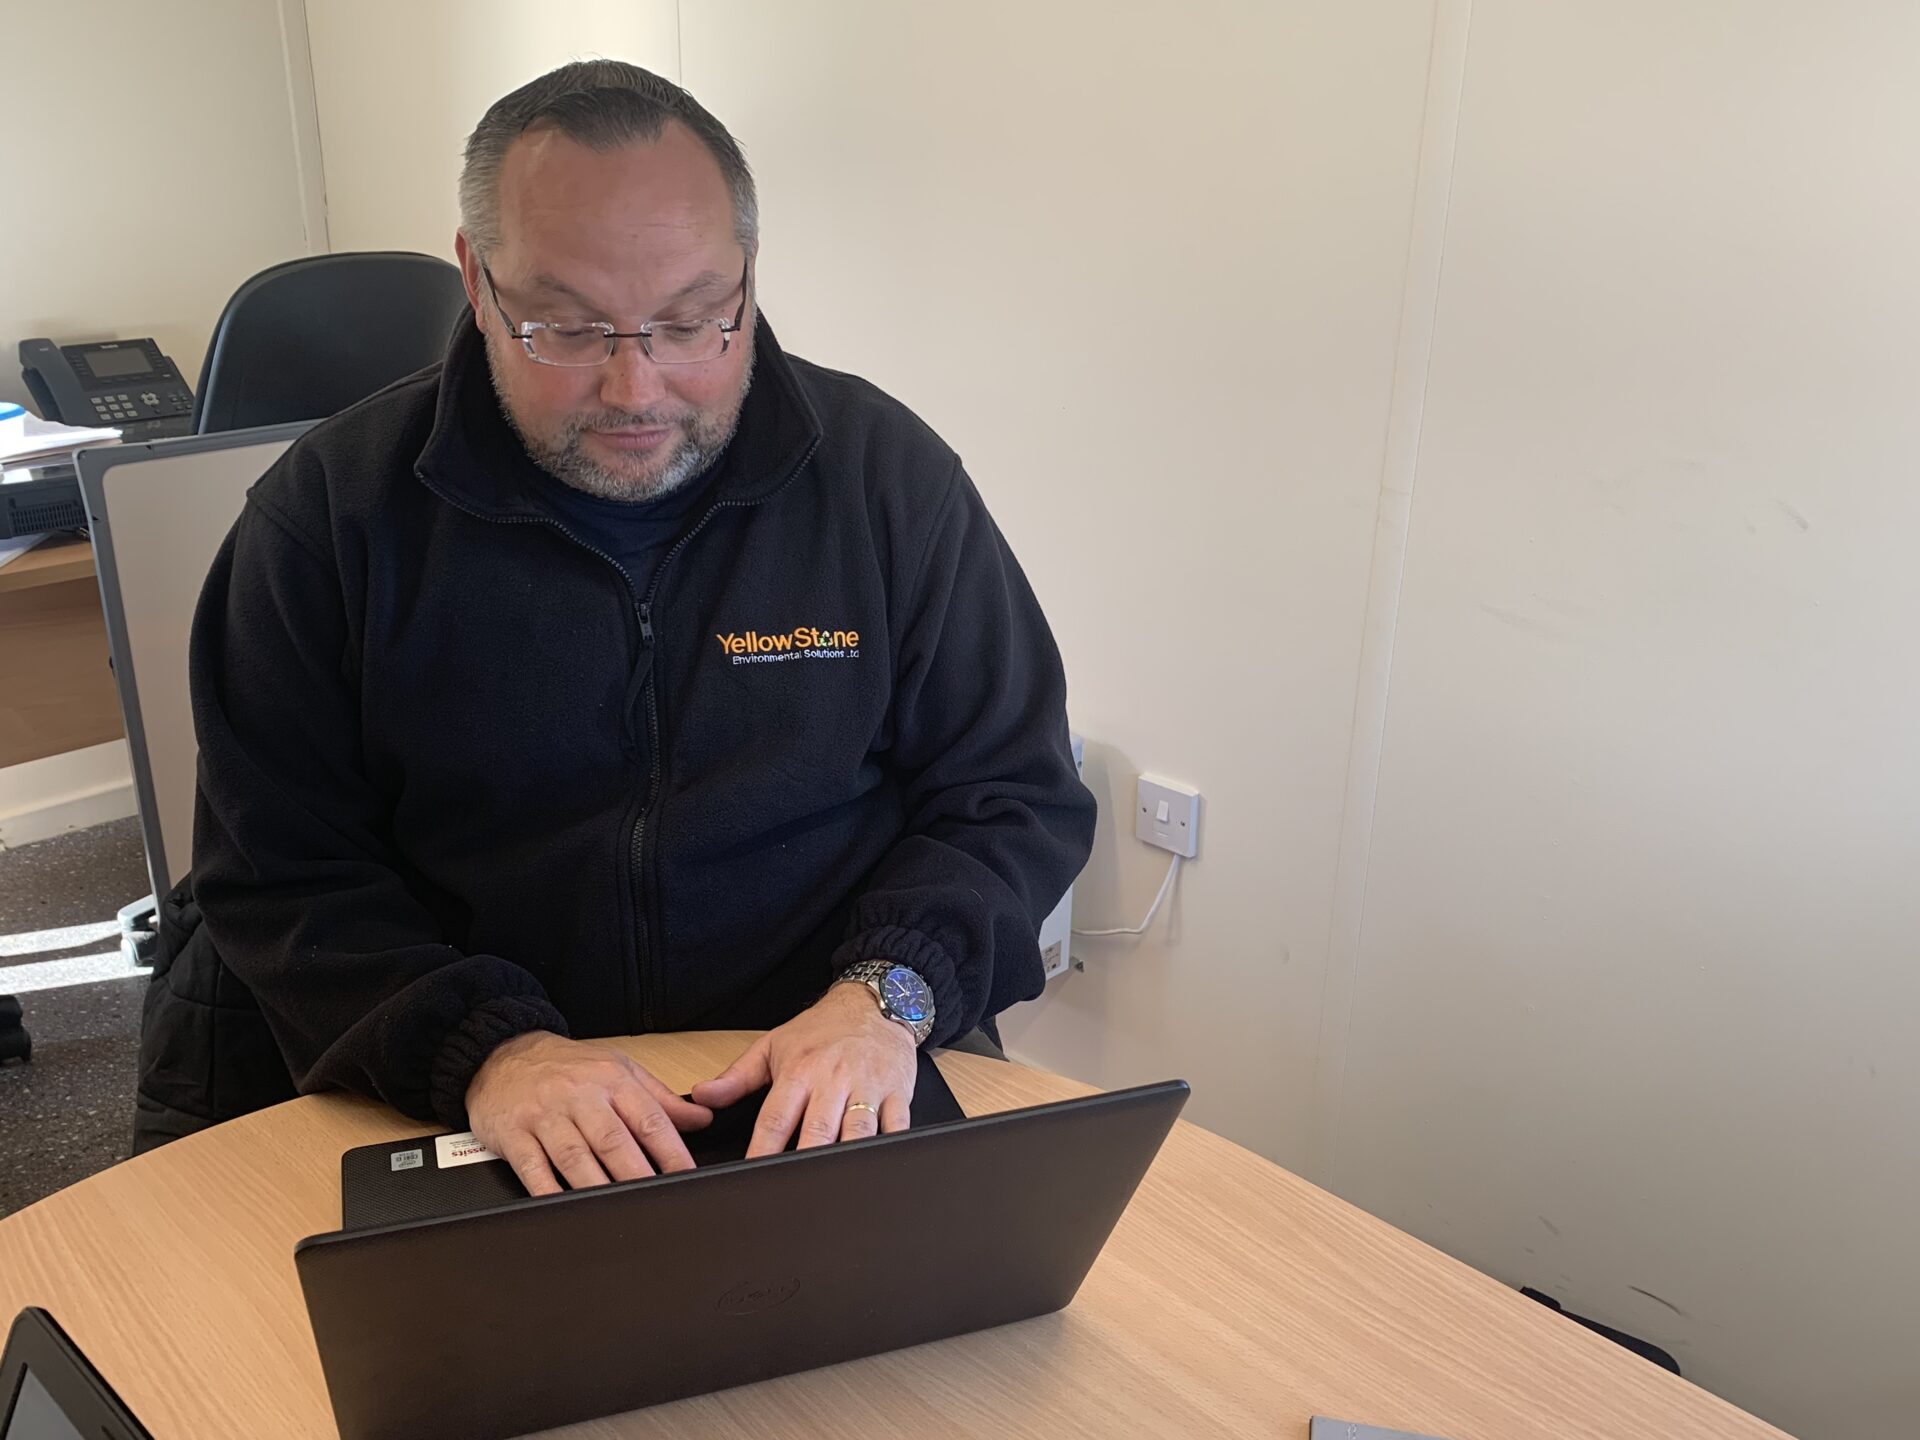 yellowstone employee sat as desk typing on laptop